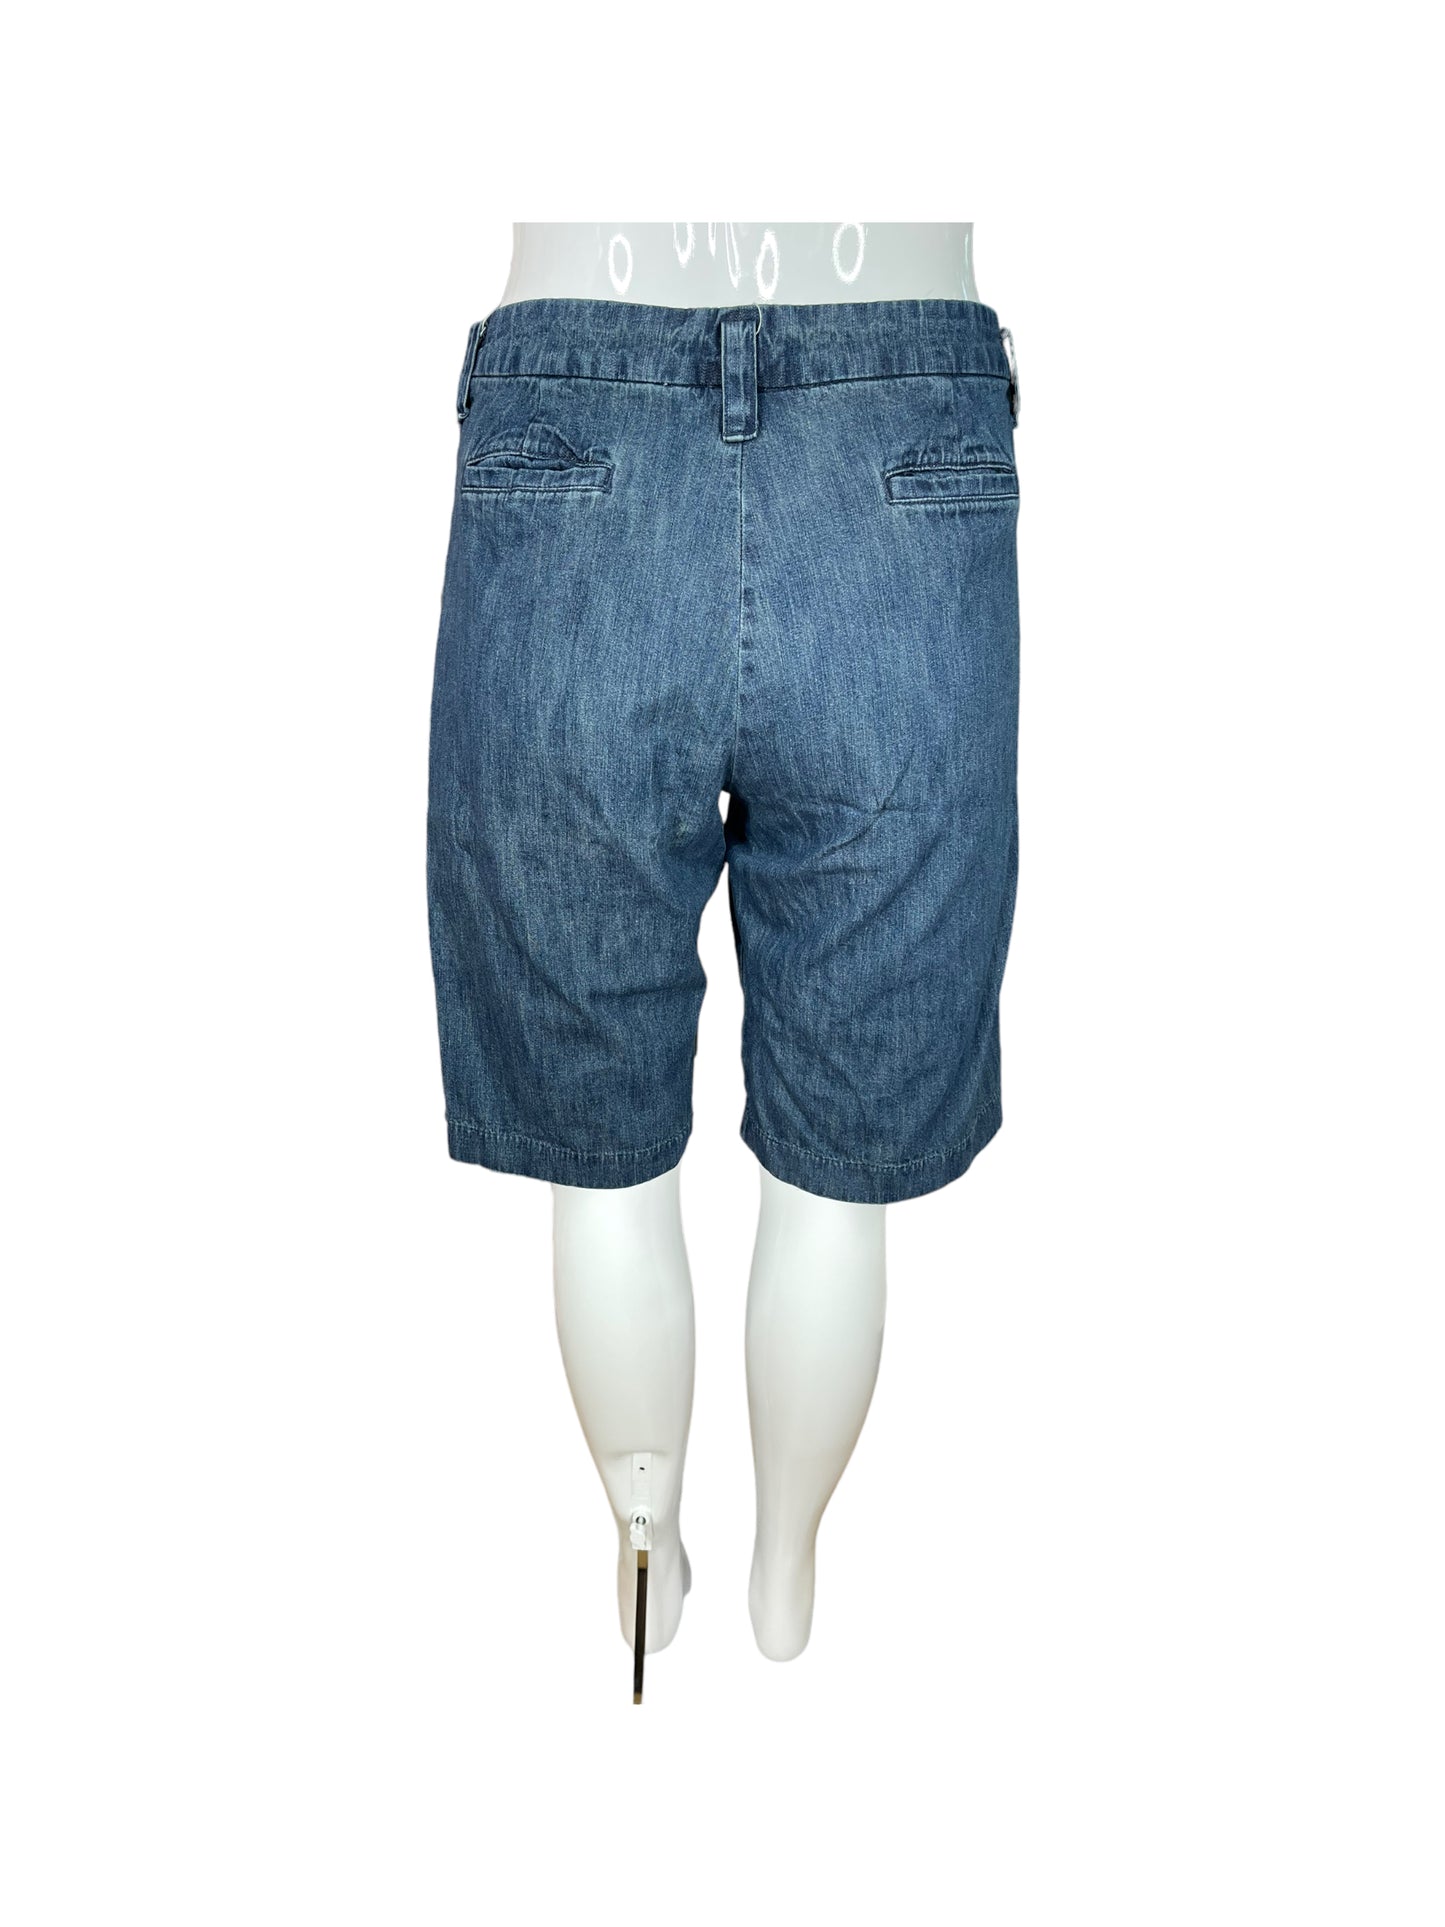 "Lee" Knee-length Blue Jean Shorts (16 medium)